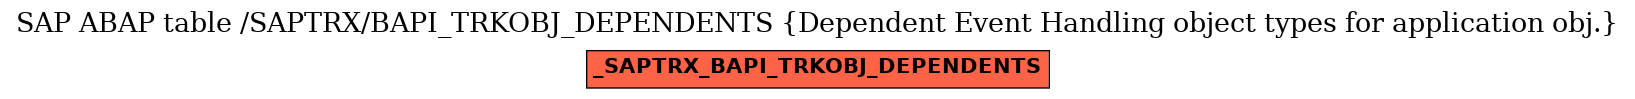 E-R Diagram for table /SAPTRX/BAPI_TRKOBJ_DEPENDENTS (Dependent Event Handling object types for application obj.)